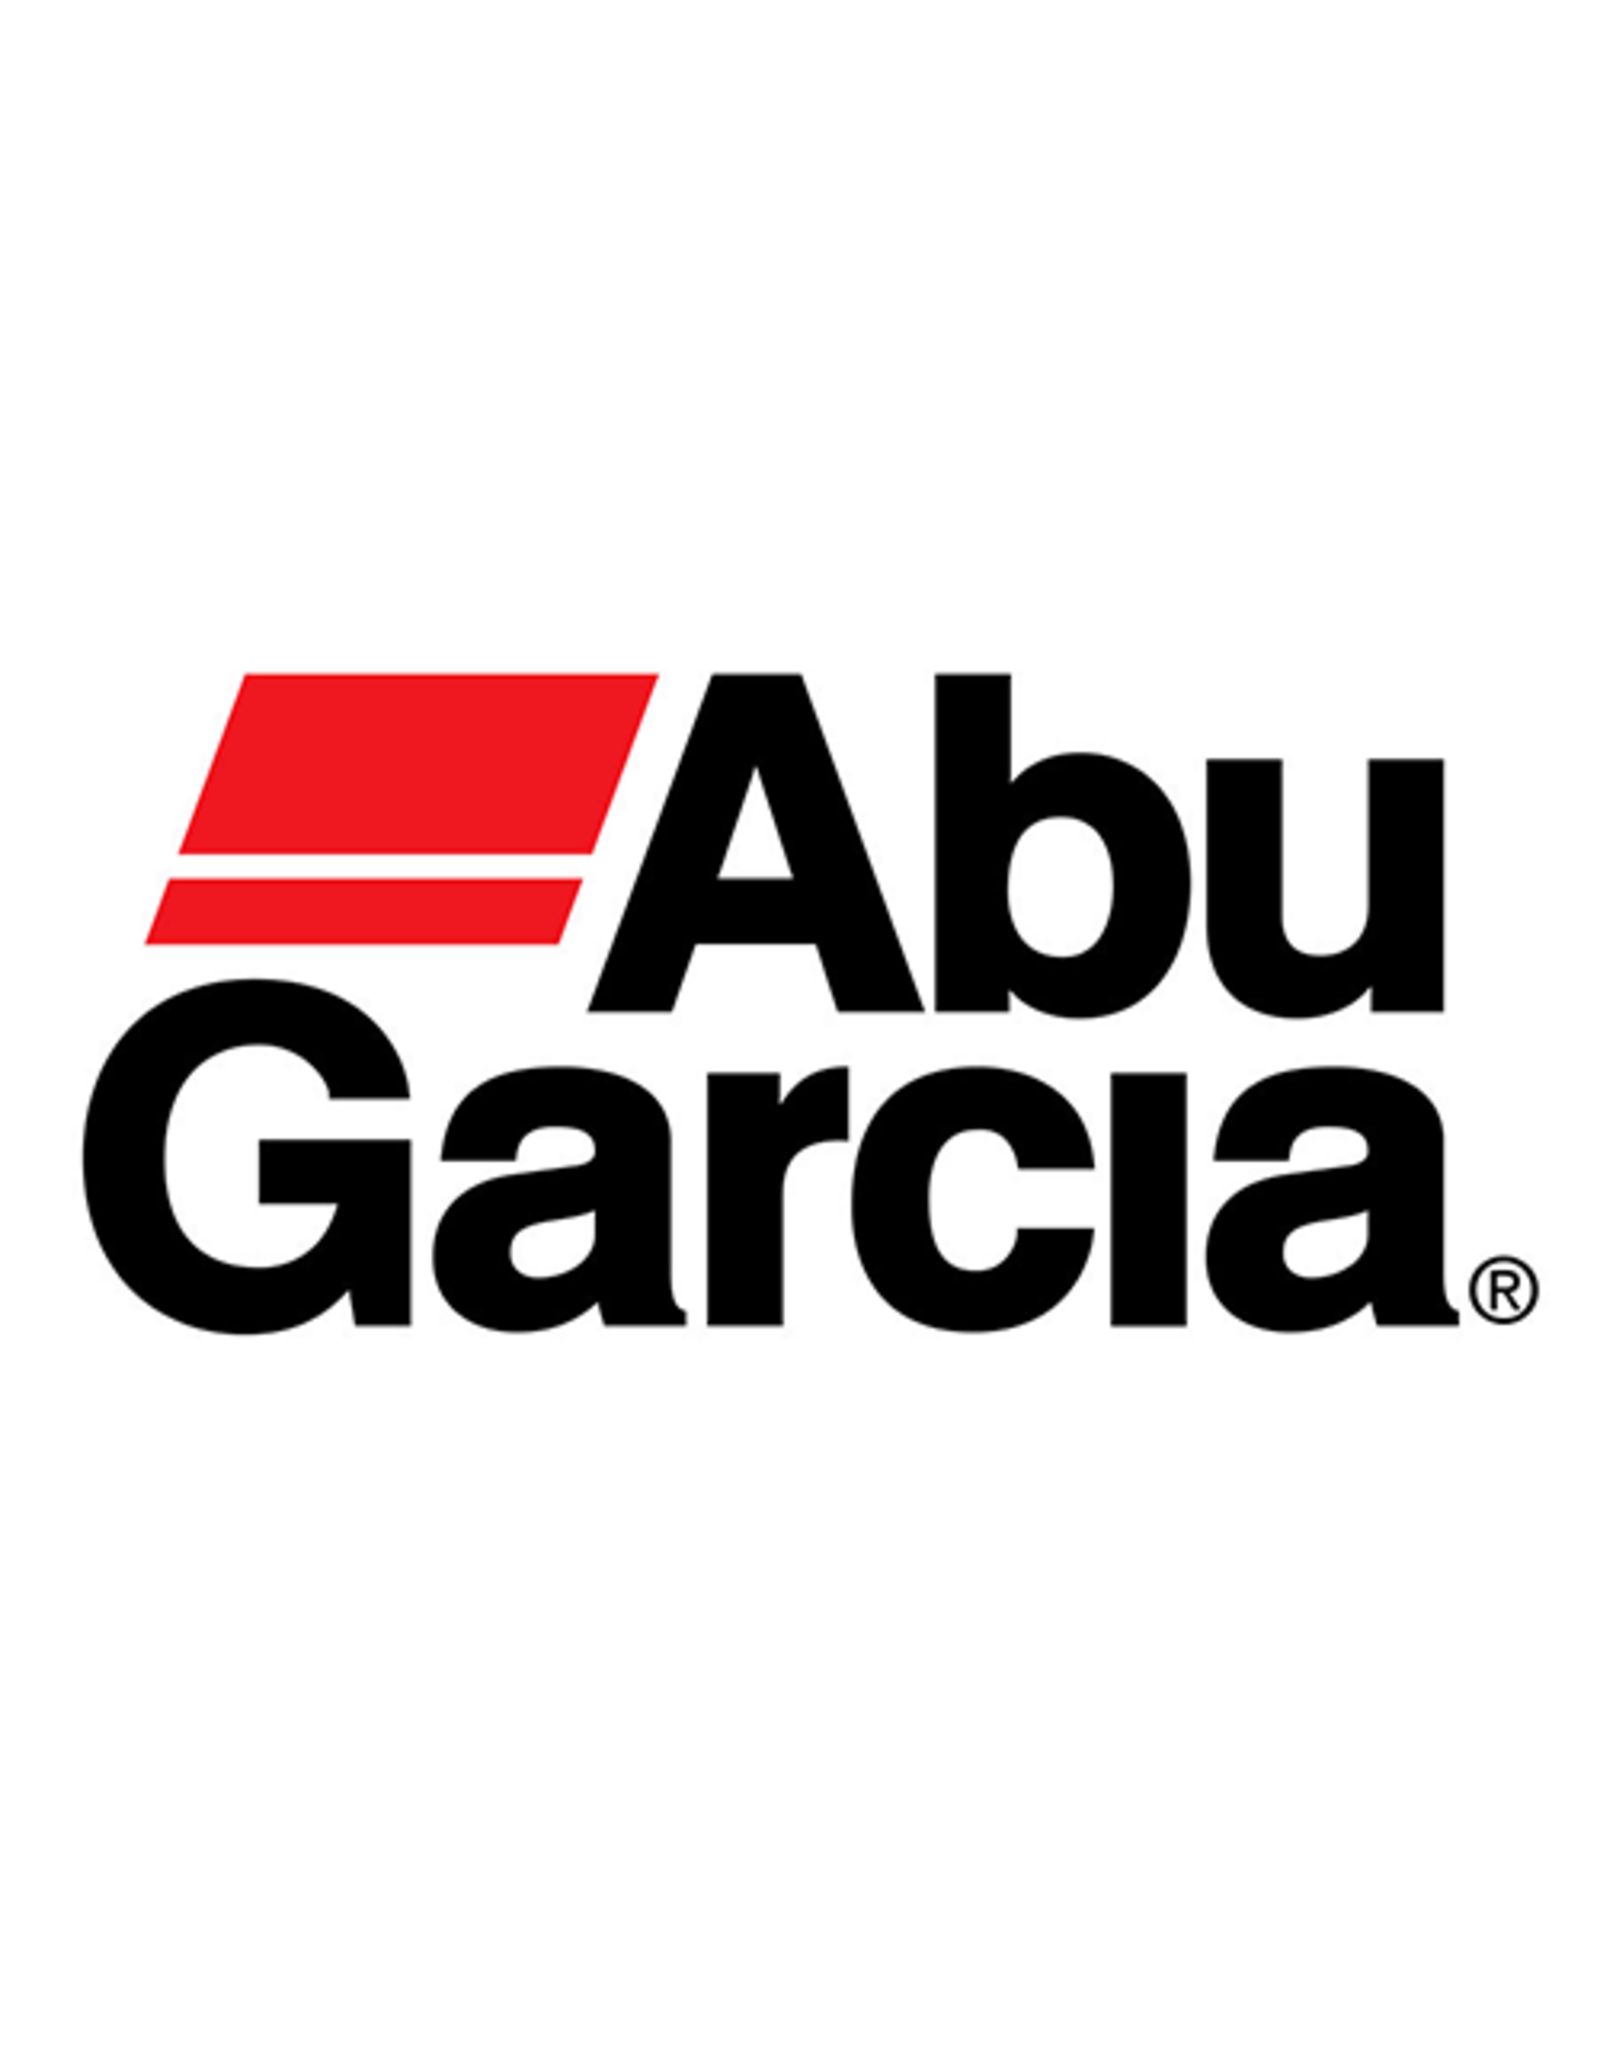 Abu Garcia 22684  ALARM COMPLETE